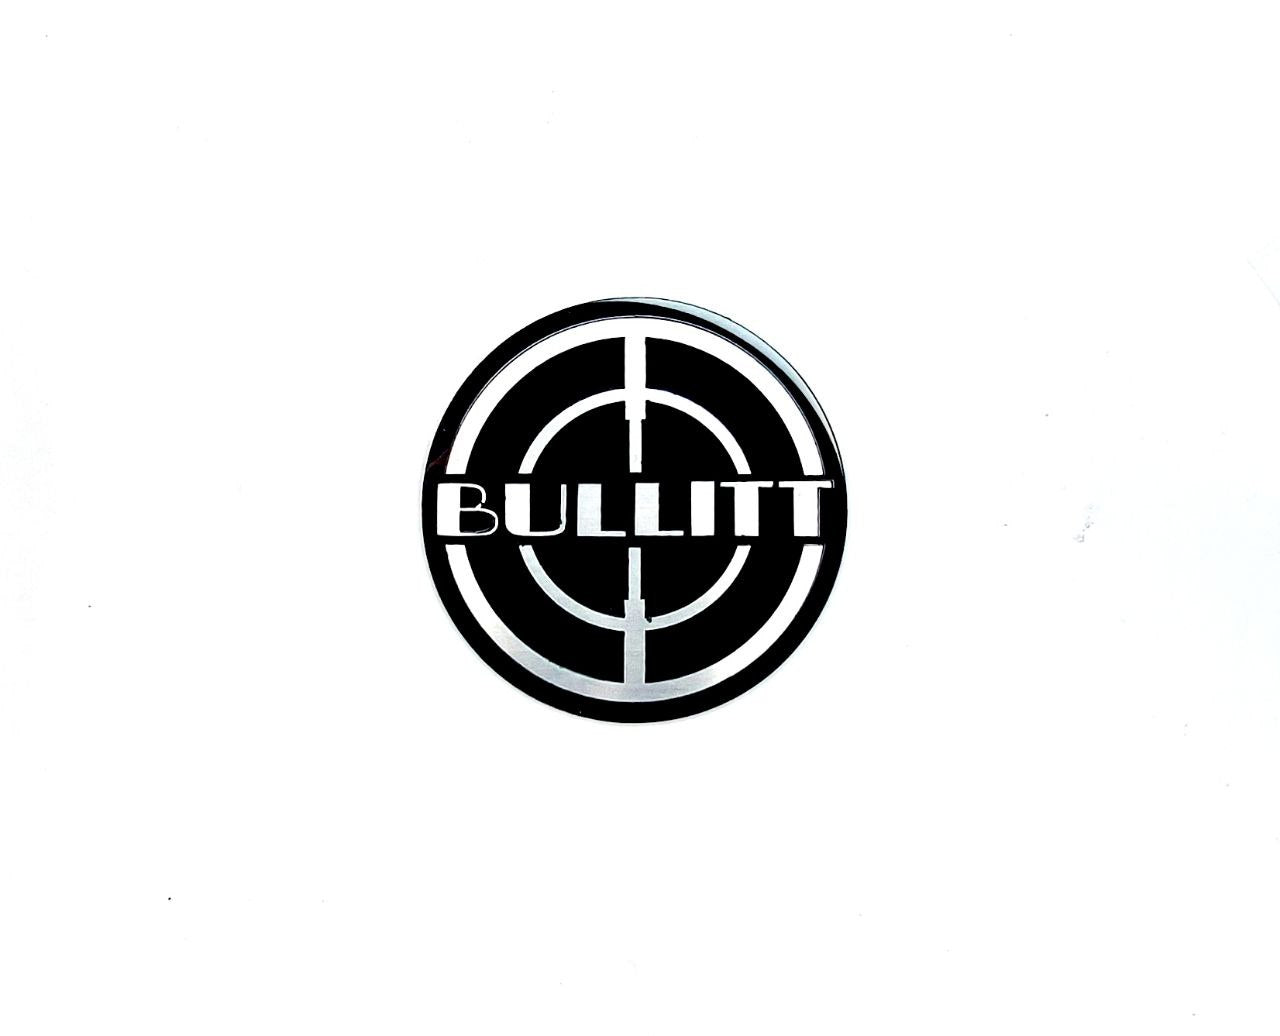 Ford Radiator grille emblem with Bullitt logo (type 2) - decoinfabric